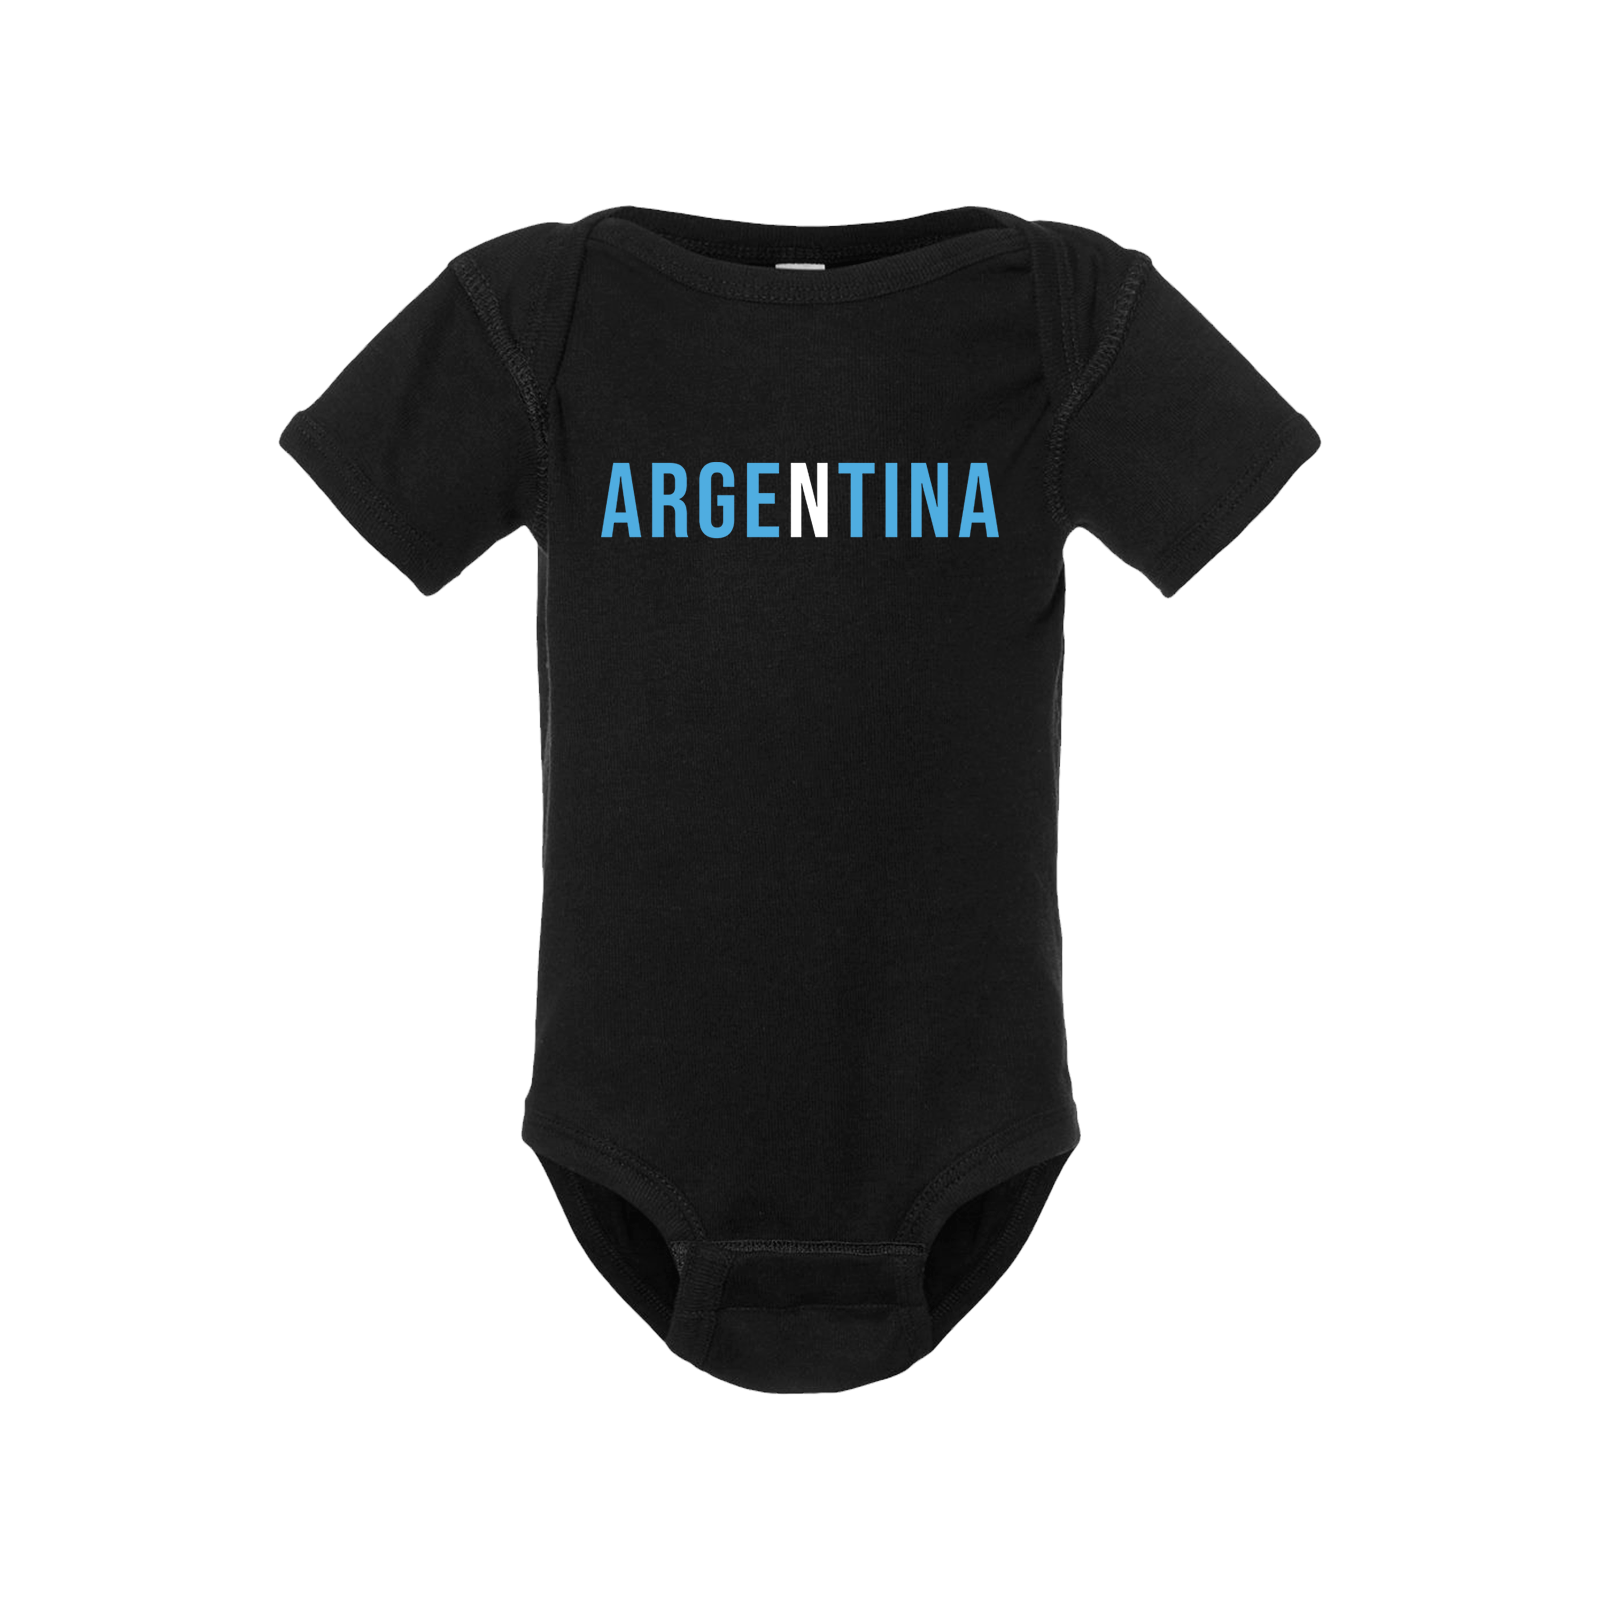 Argentina Short Sleeve Onesie - Babies & Toddlers